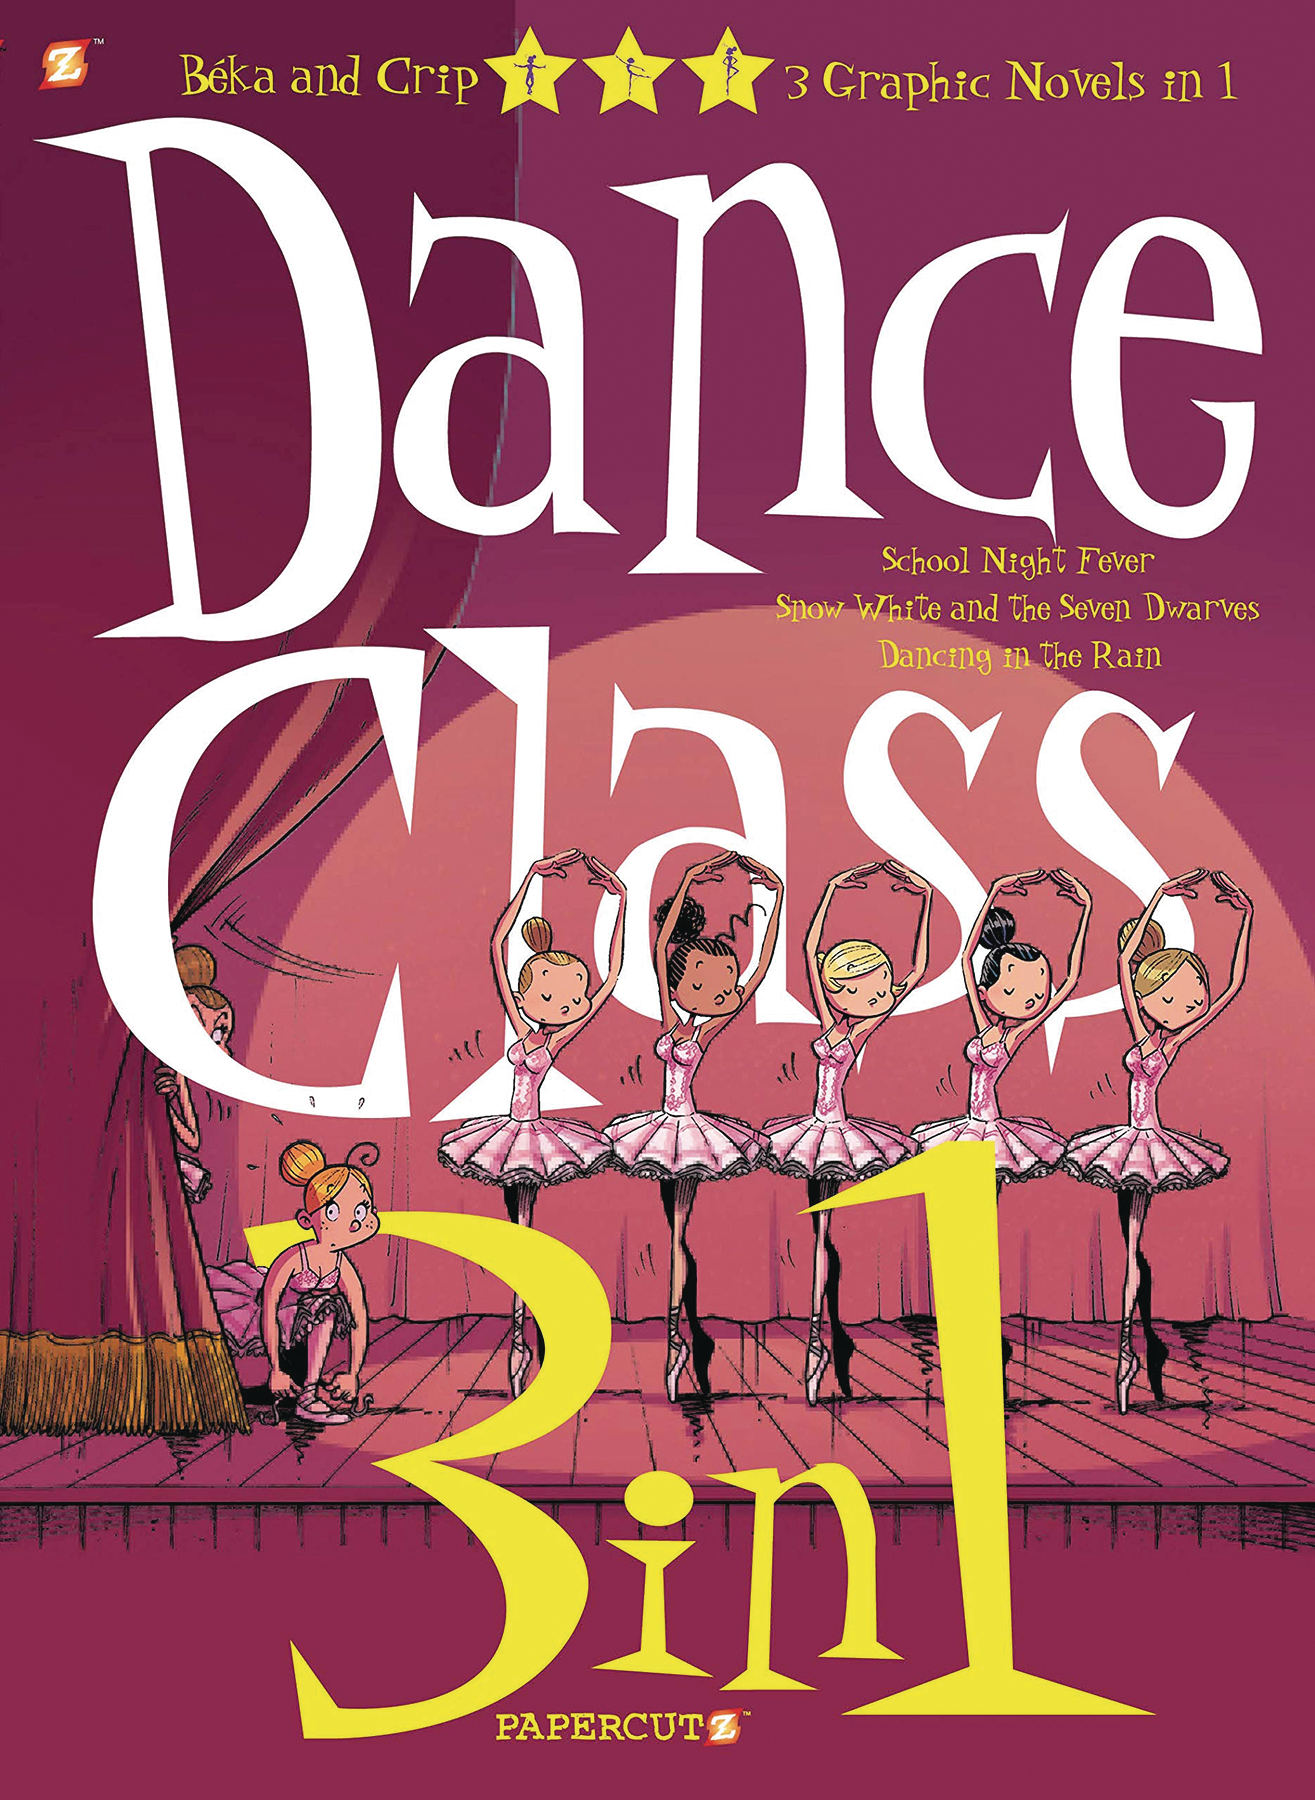 Dance Class 3 In 1 Graphic Novel Volume 3